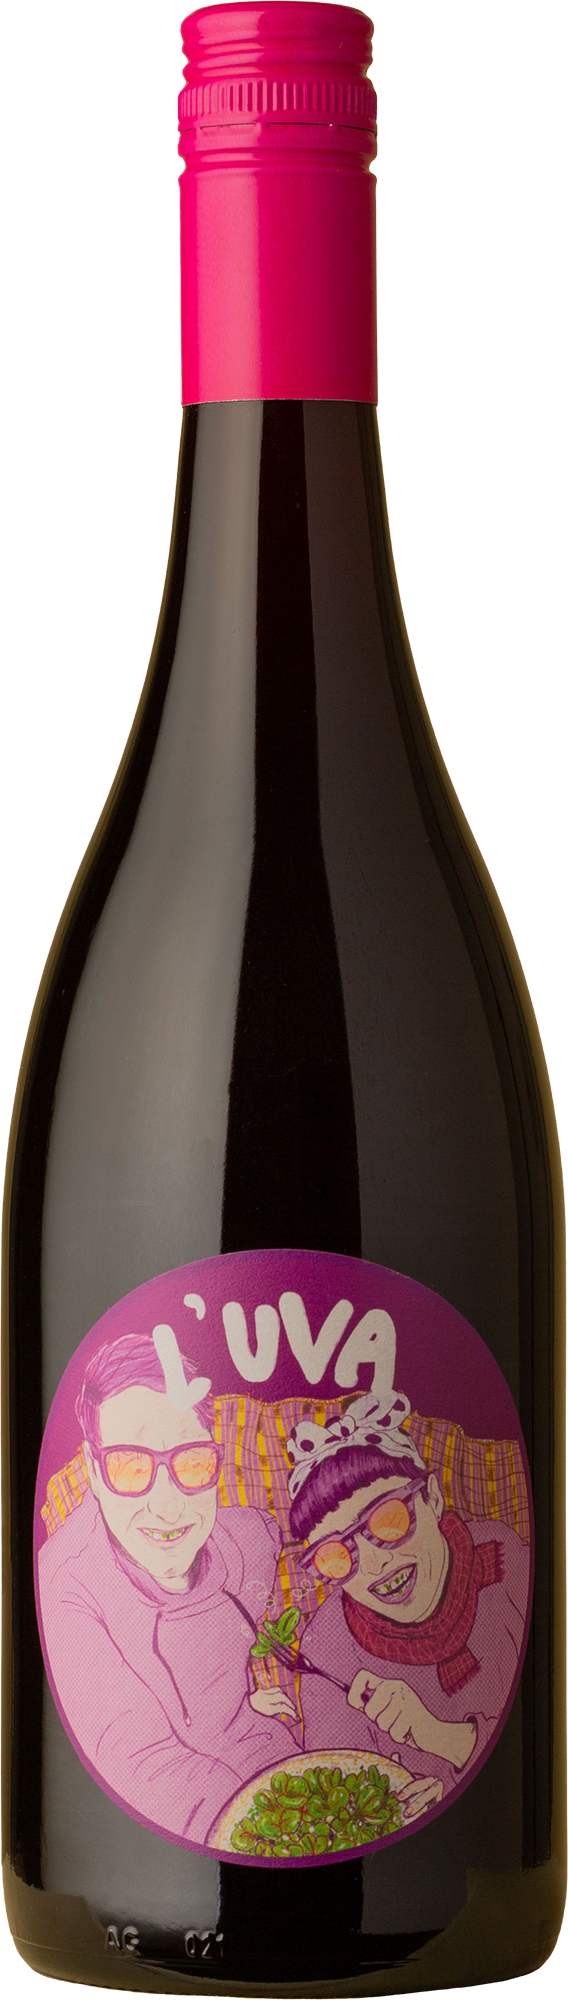 L'Uva - Picnic Rouge Tinta Barocca 2021 Red Wine